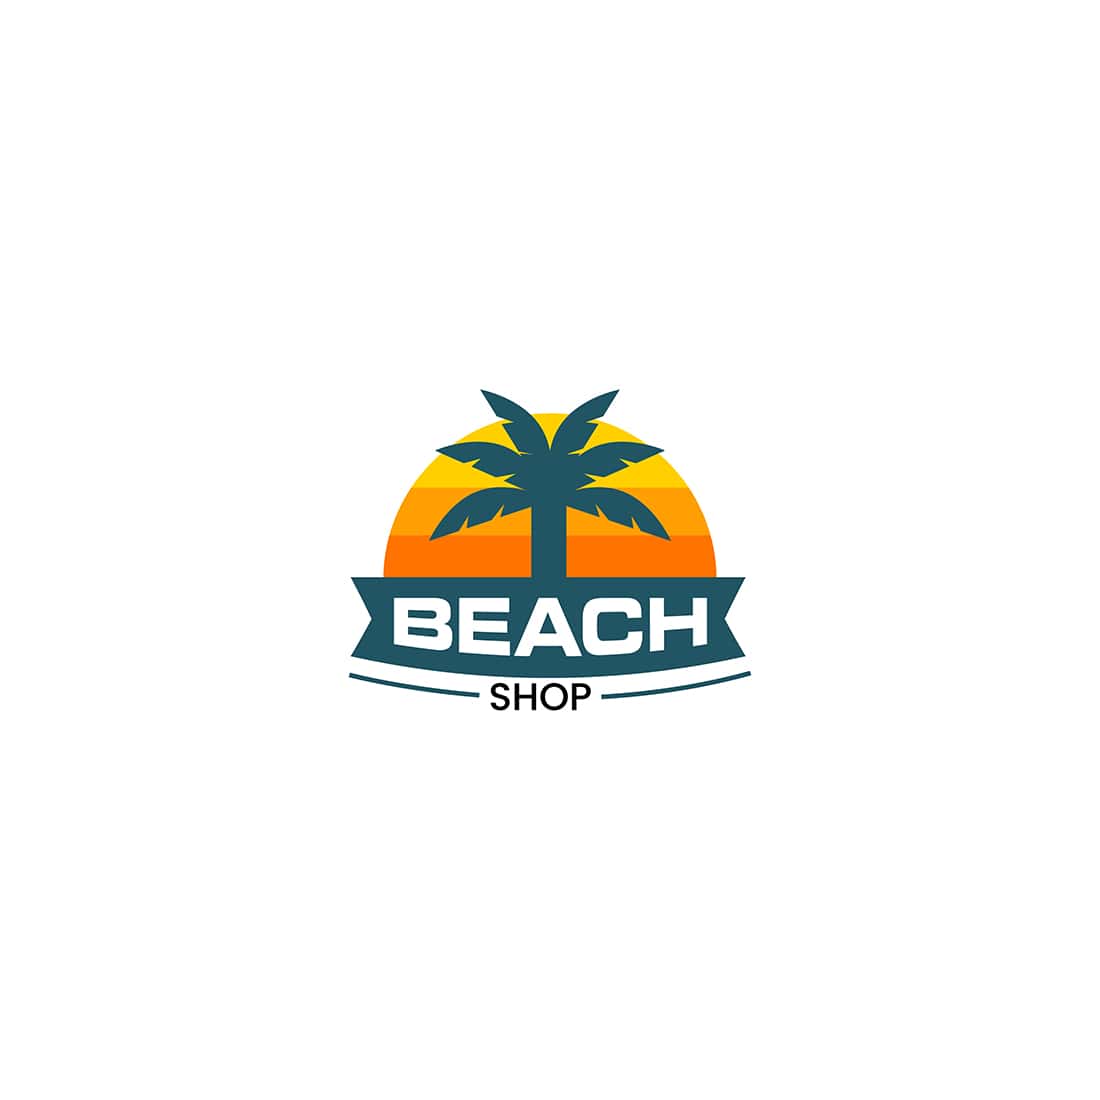 beach shop logo 01 min 592